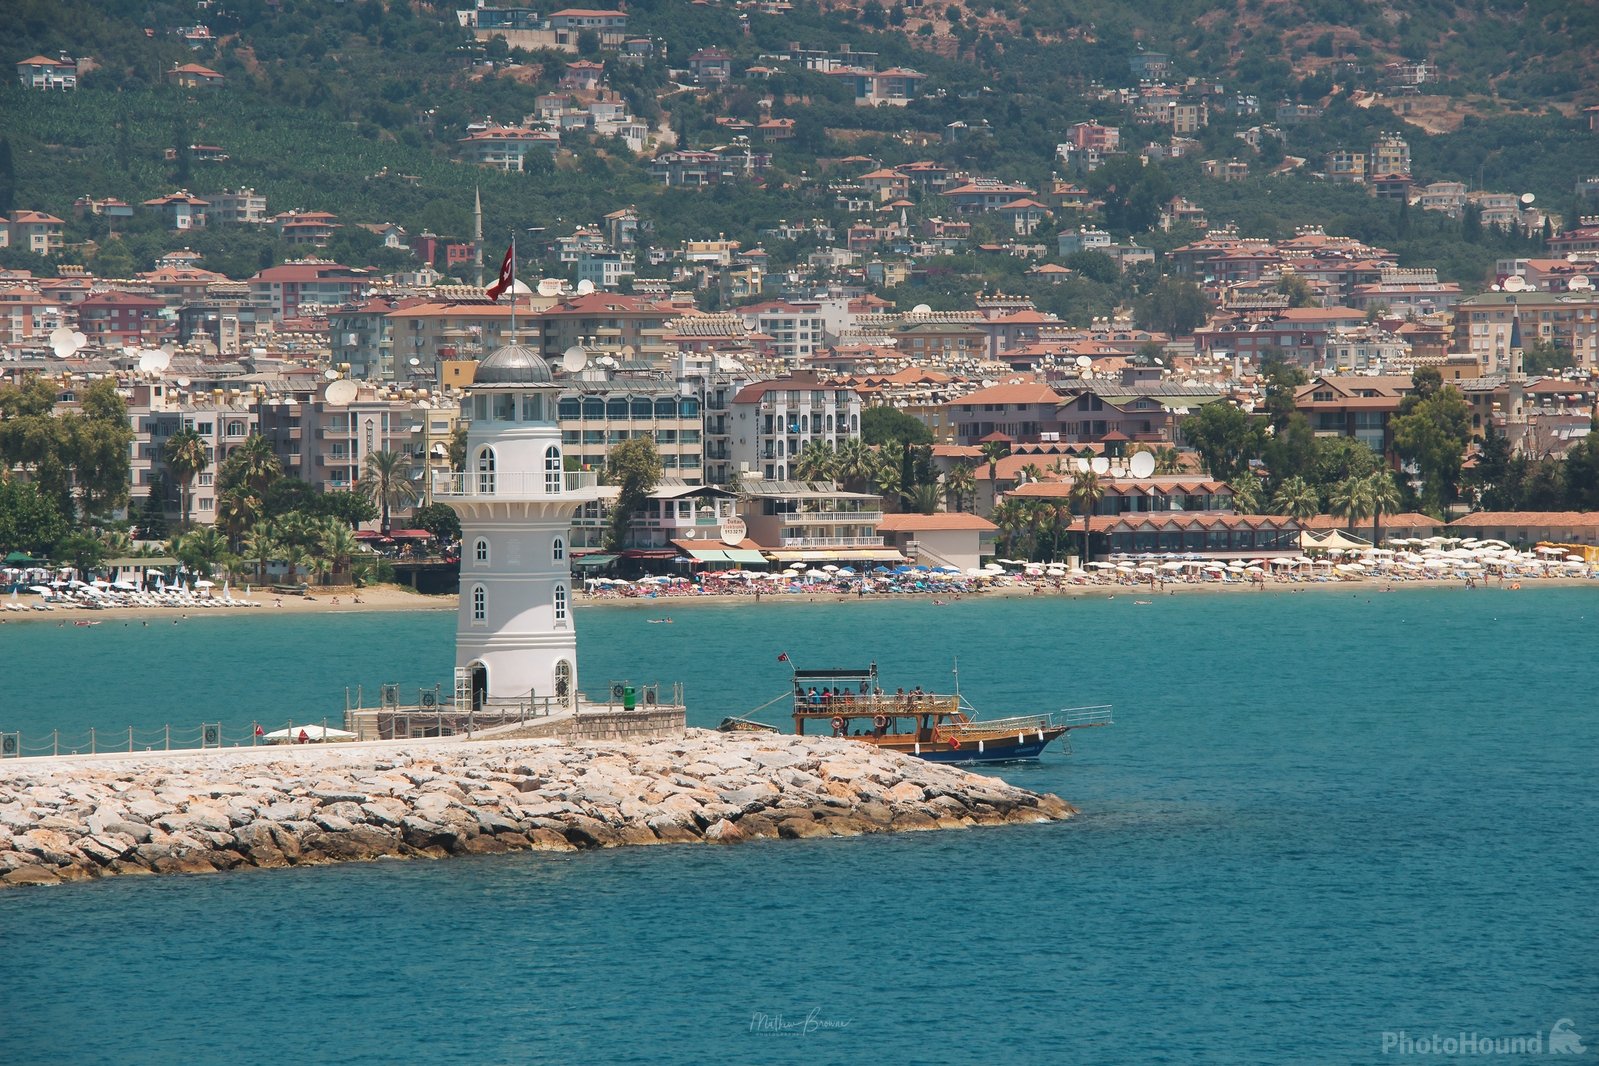 Image of Alanya Lighthouse (Alanya Deniz Feneri) by Mathew Browne